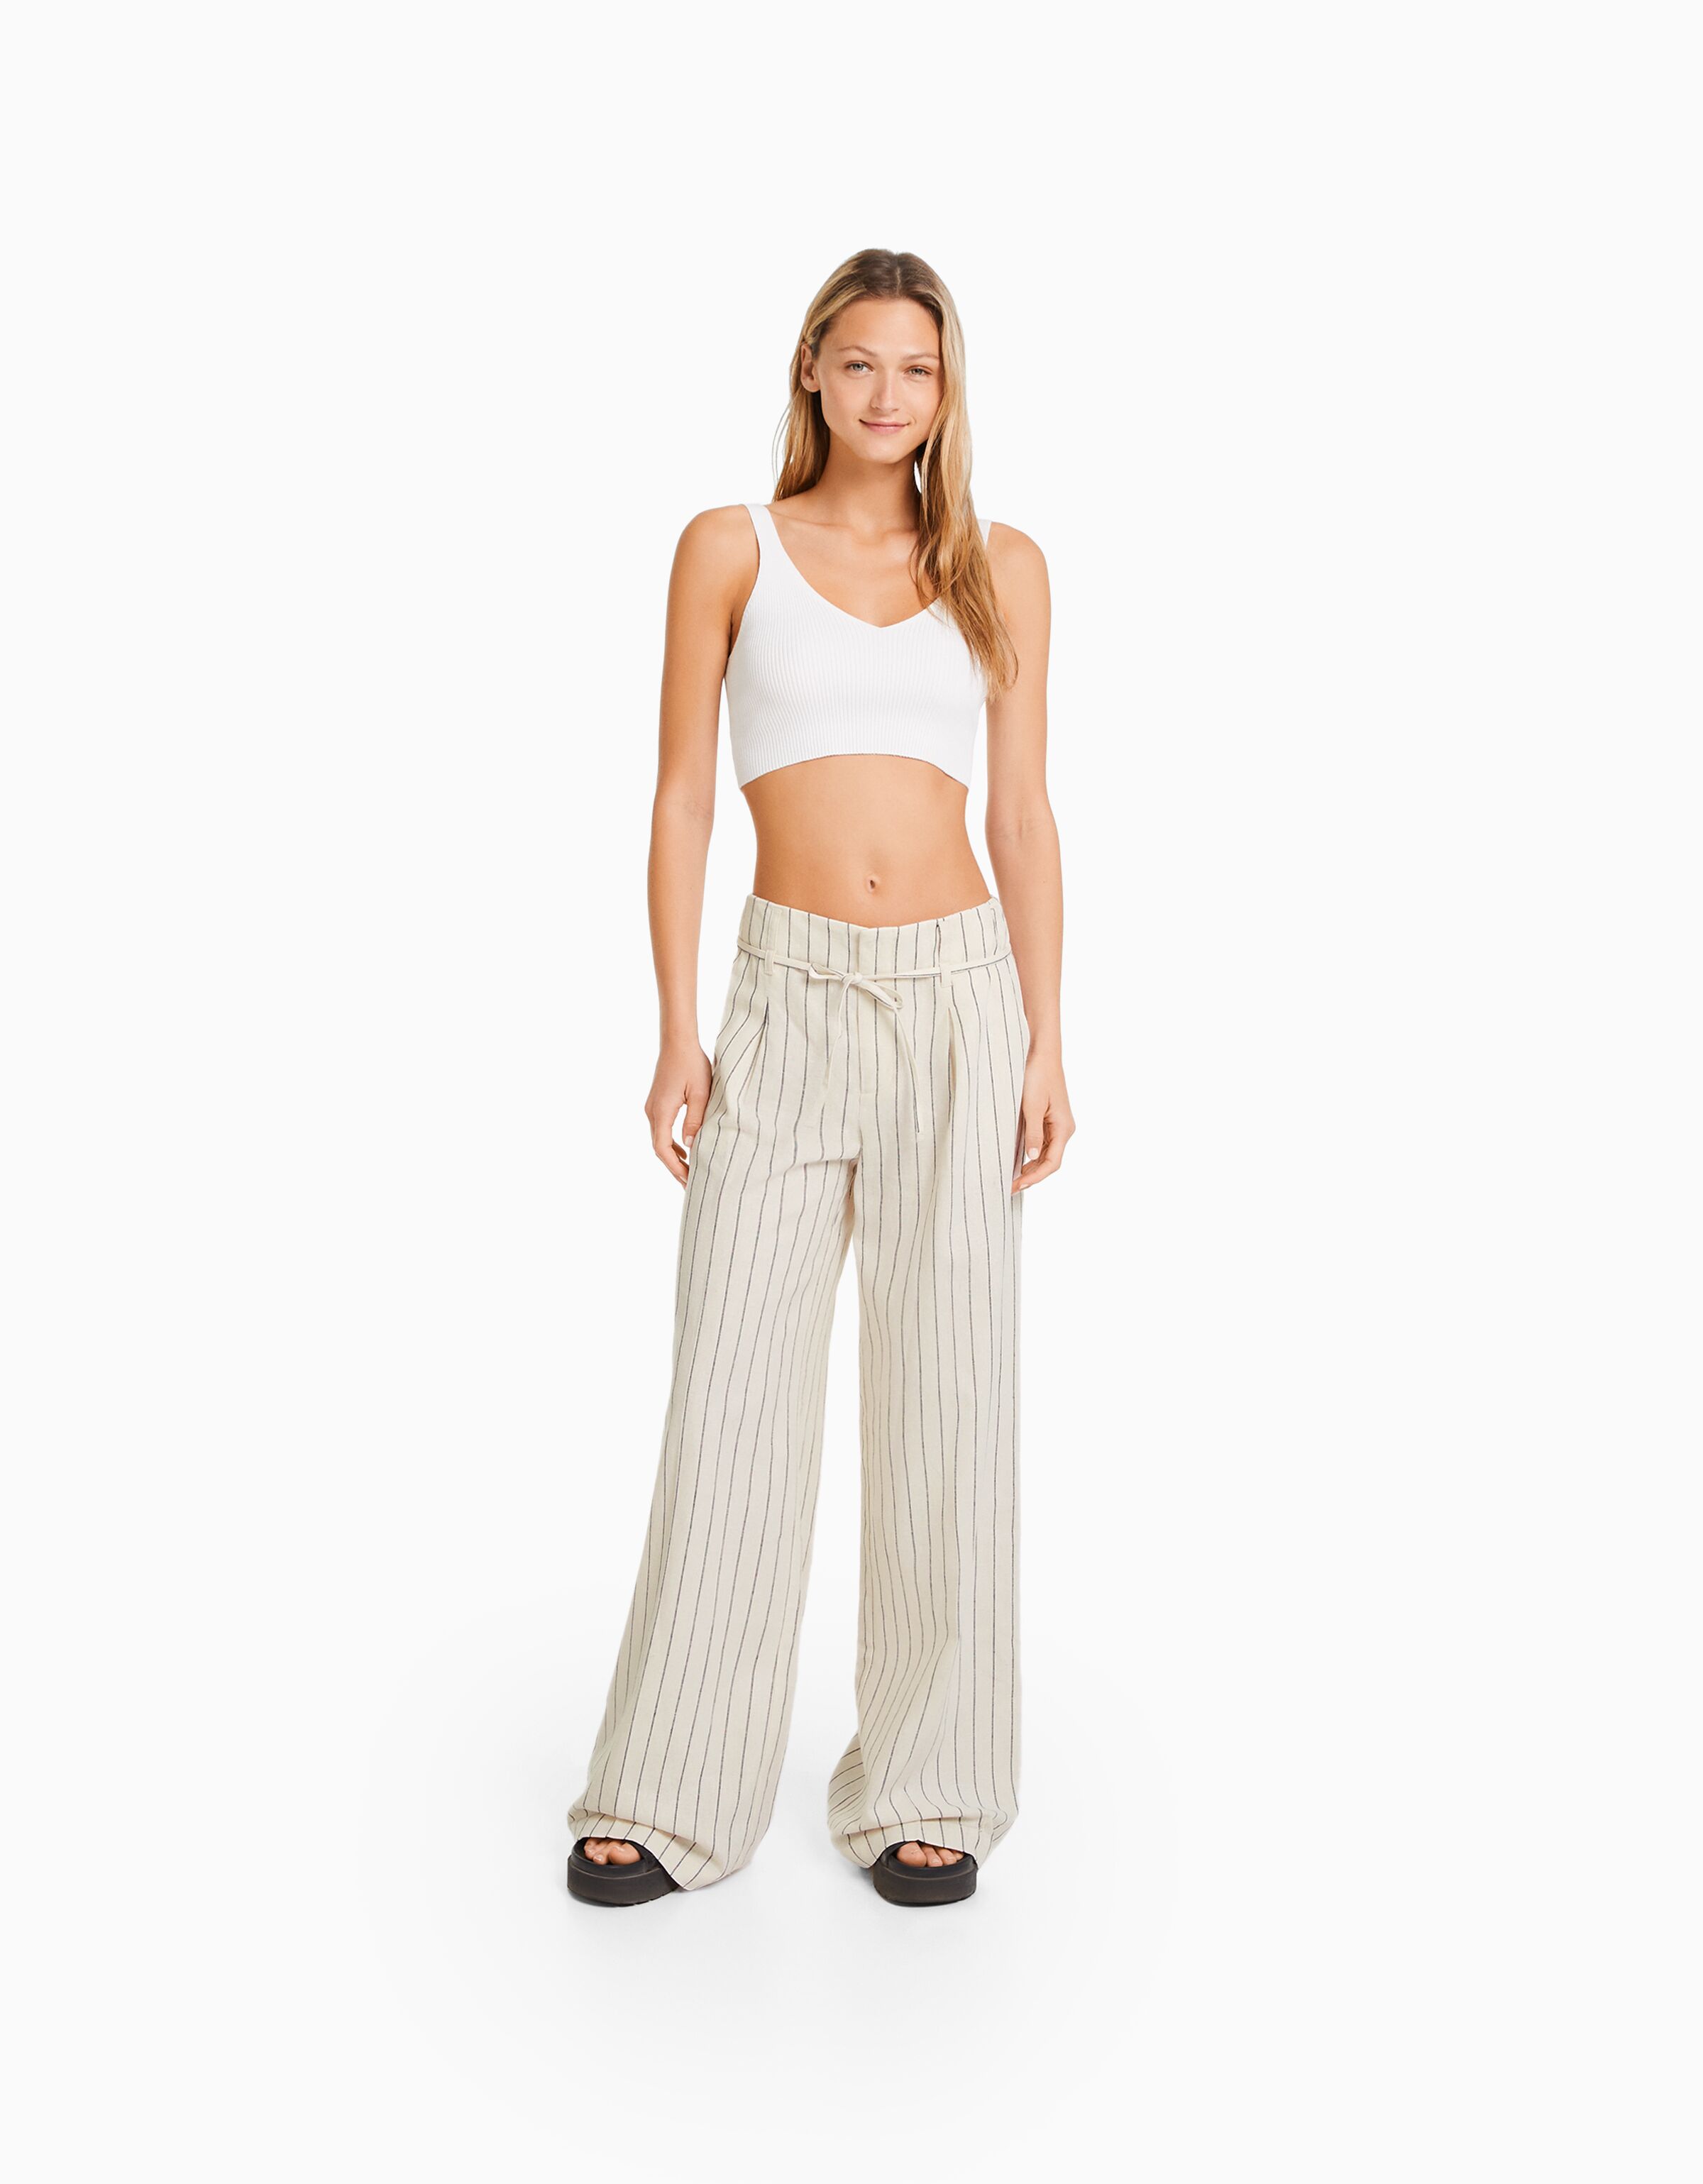 Bershka Womens Grey Striped Polyester Trousers Size XS L25 in Regular  eBay